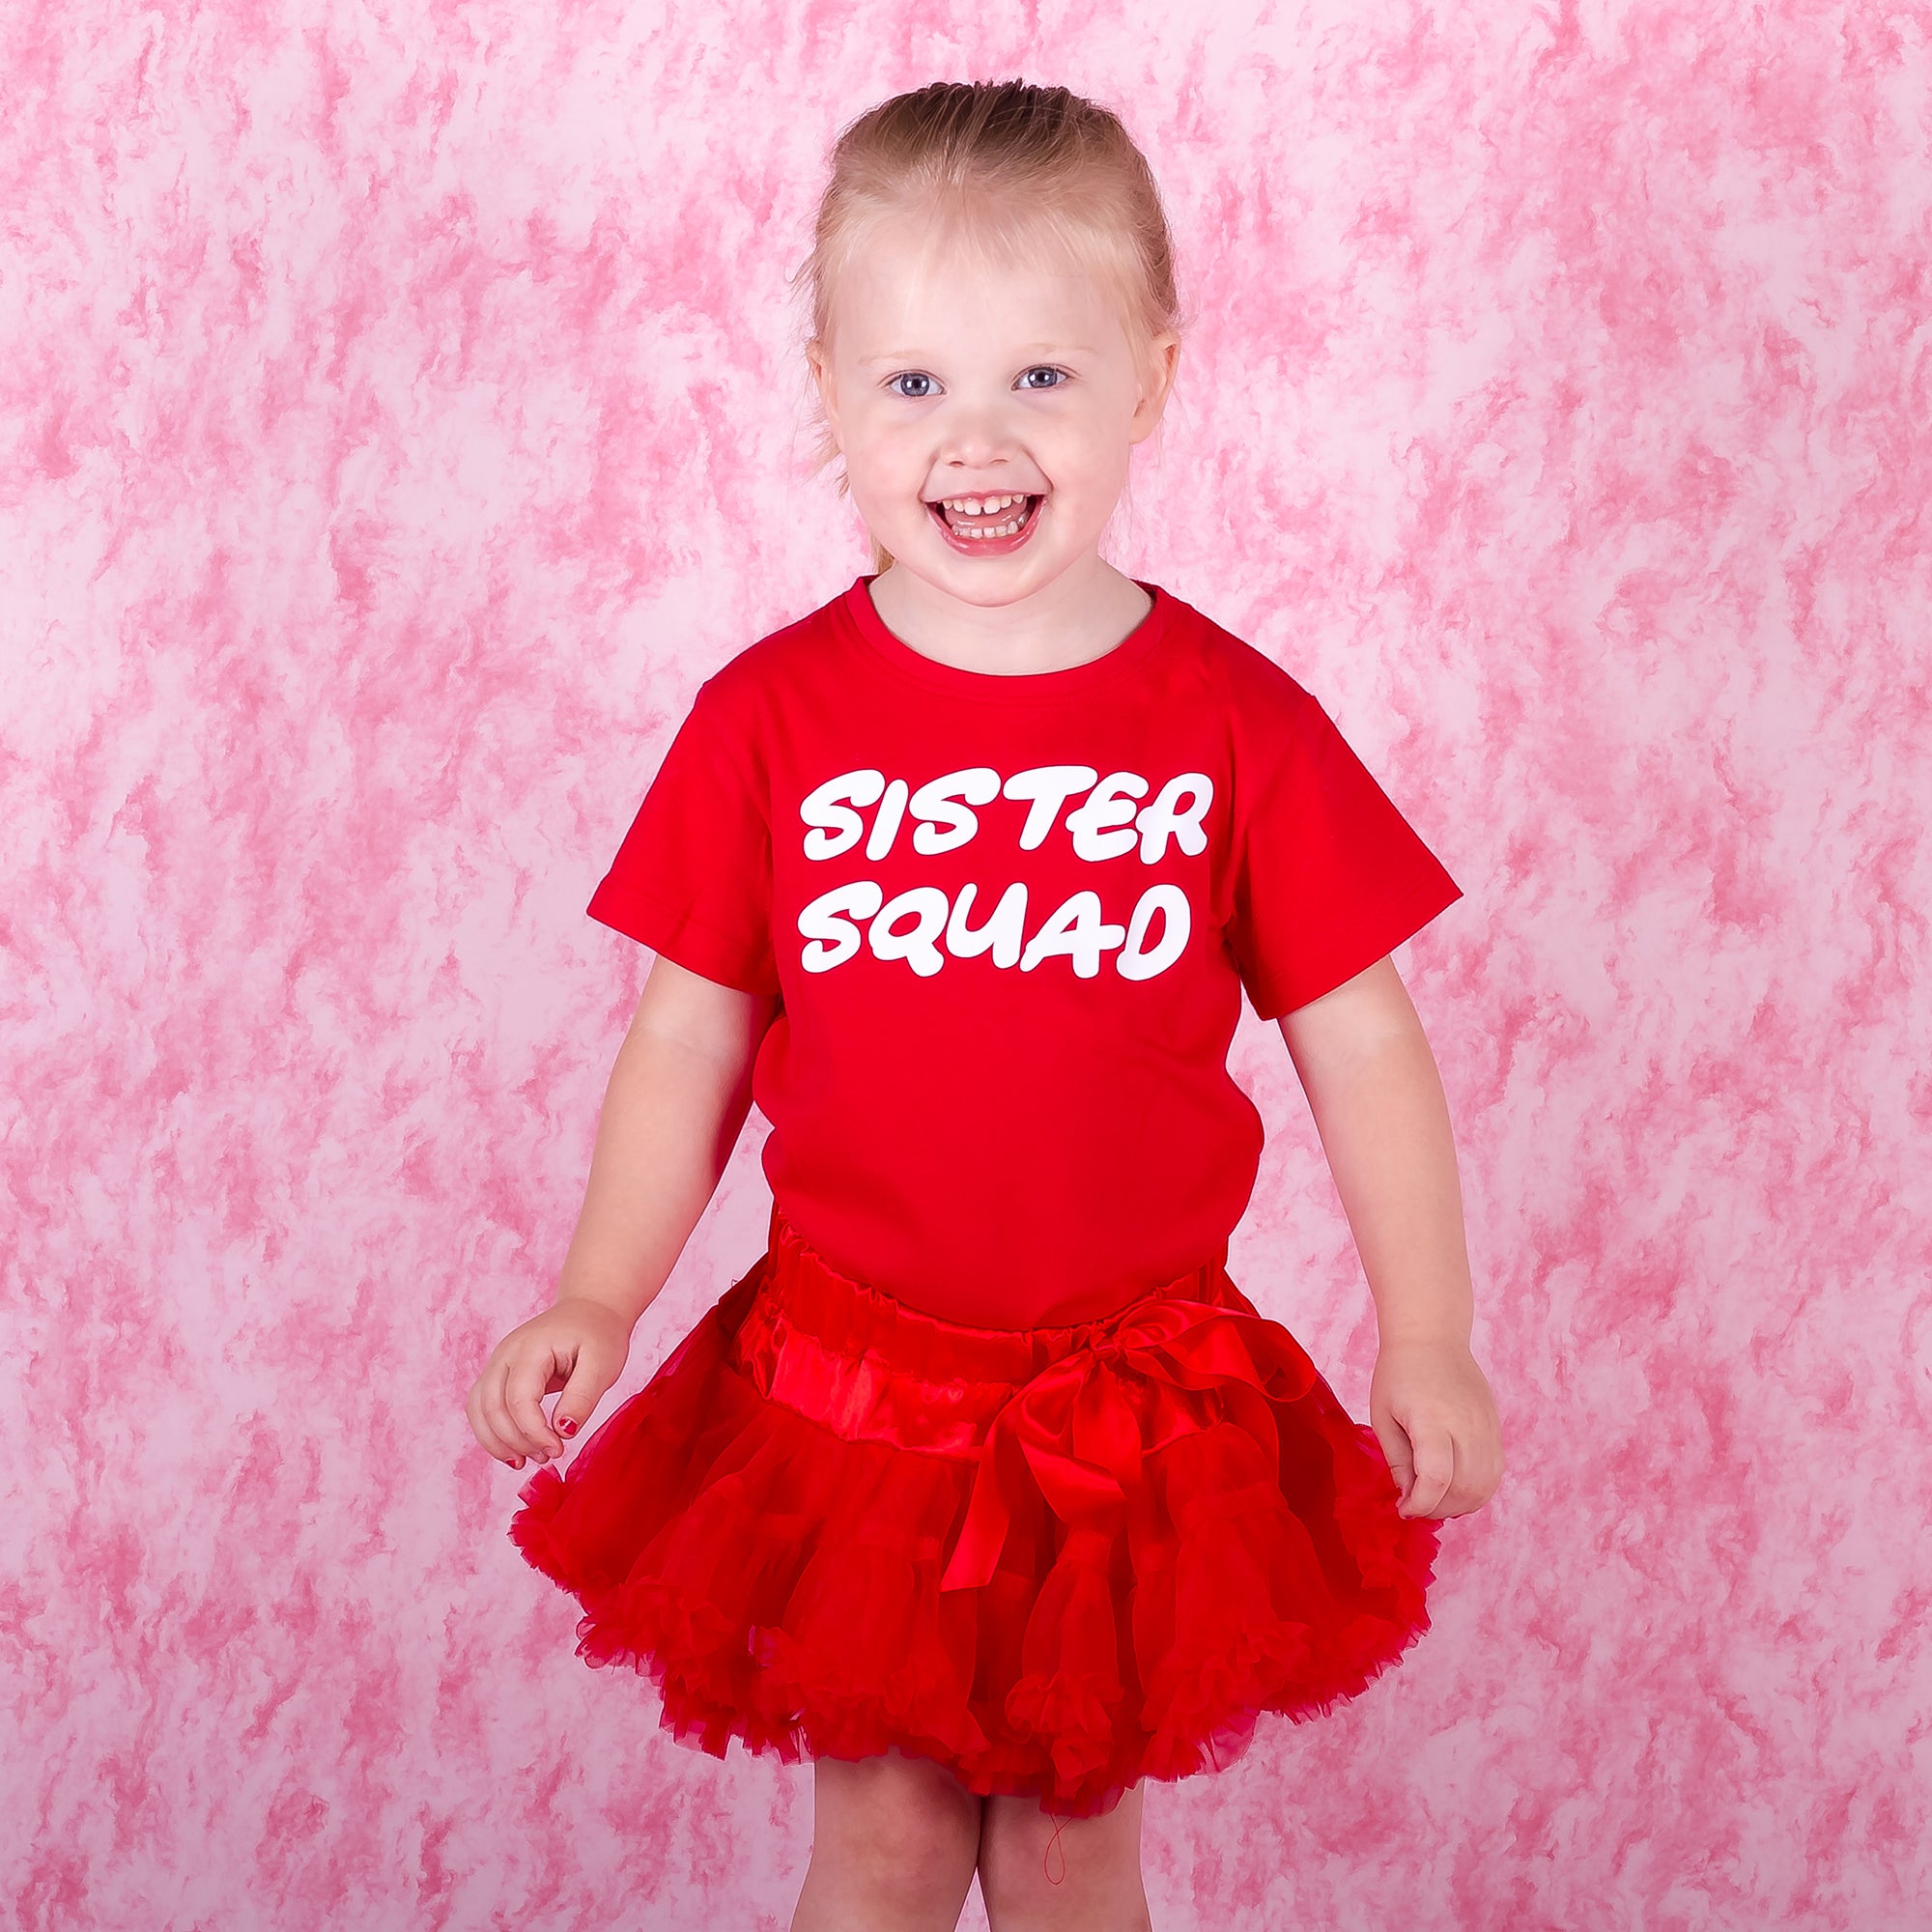 'Sister squad' kids shortsleeve shirt